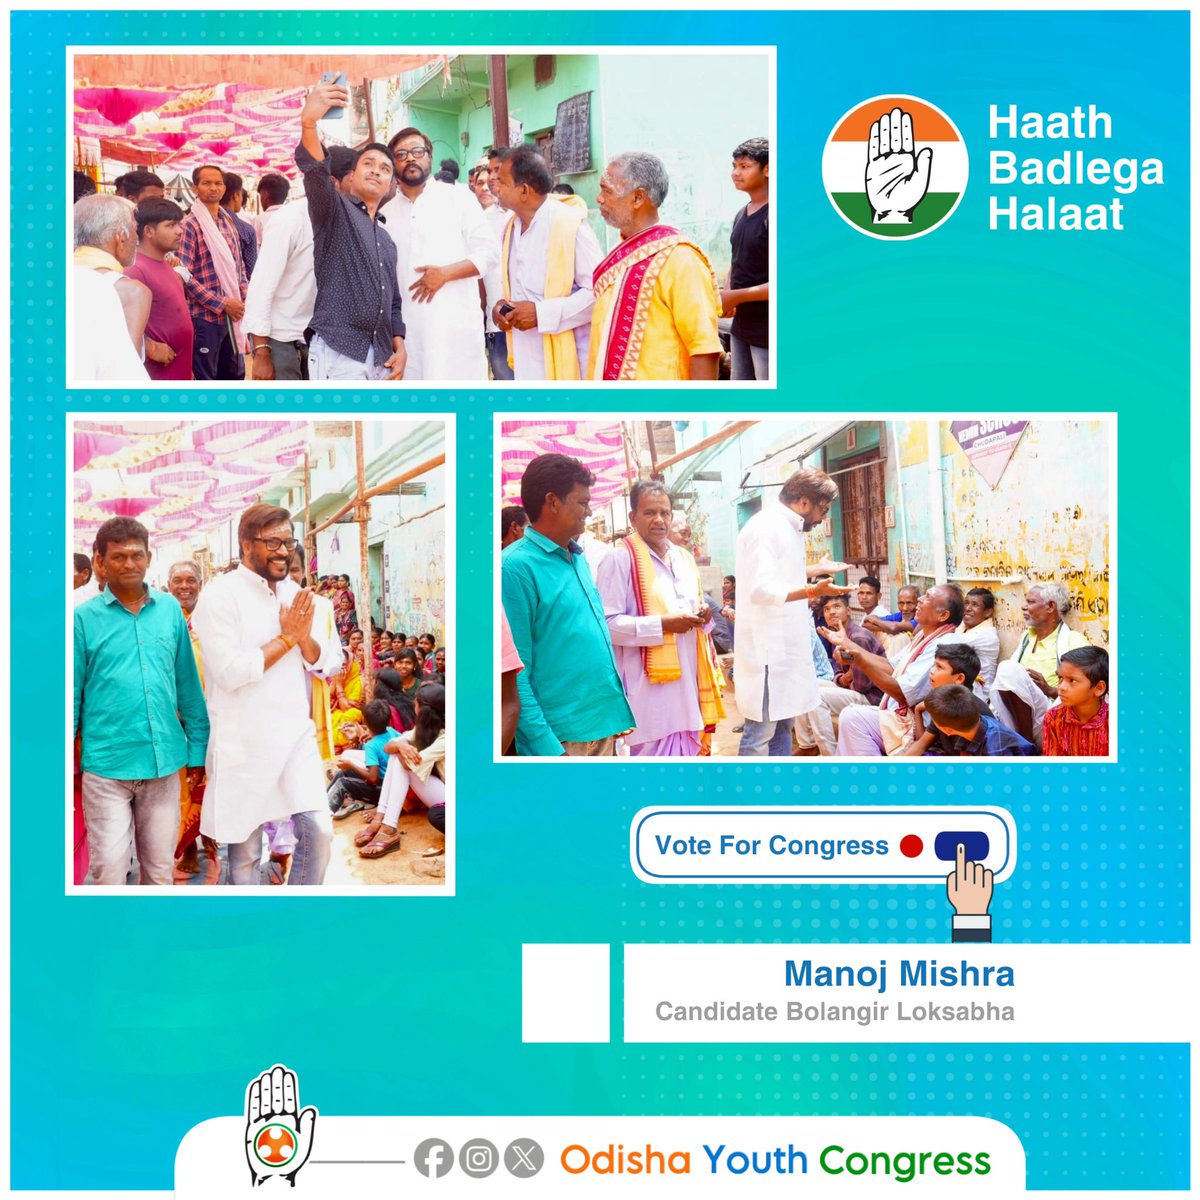 Vote For Congress ✋
Vote For Manoj Mishra 
Candidate Bolangir Loksabha

#HaathBadlegaHalaat 
#AsuchiCongress